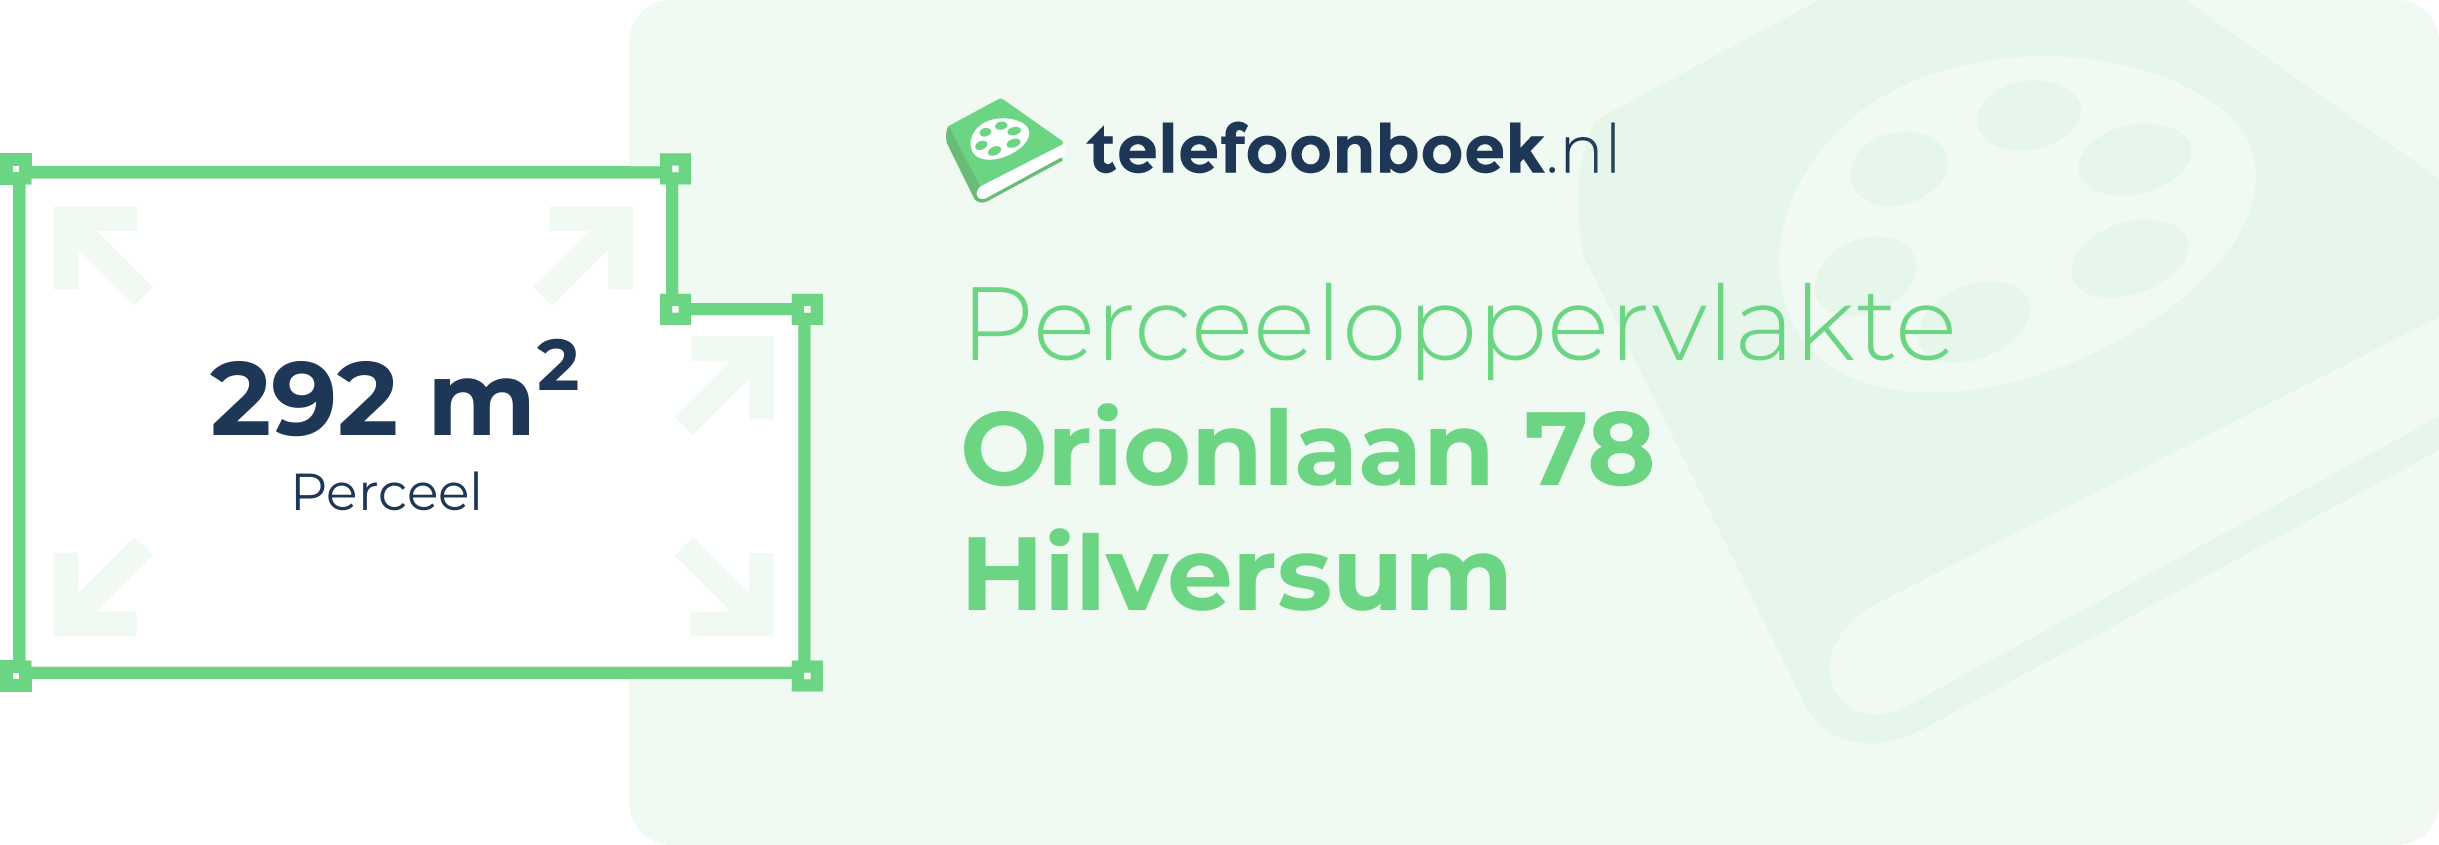 Perceeloppervlakte Orionlaan 78 Hilversum